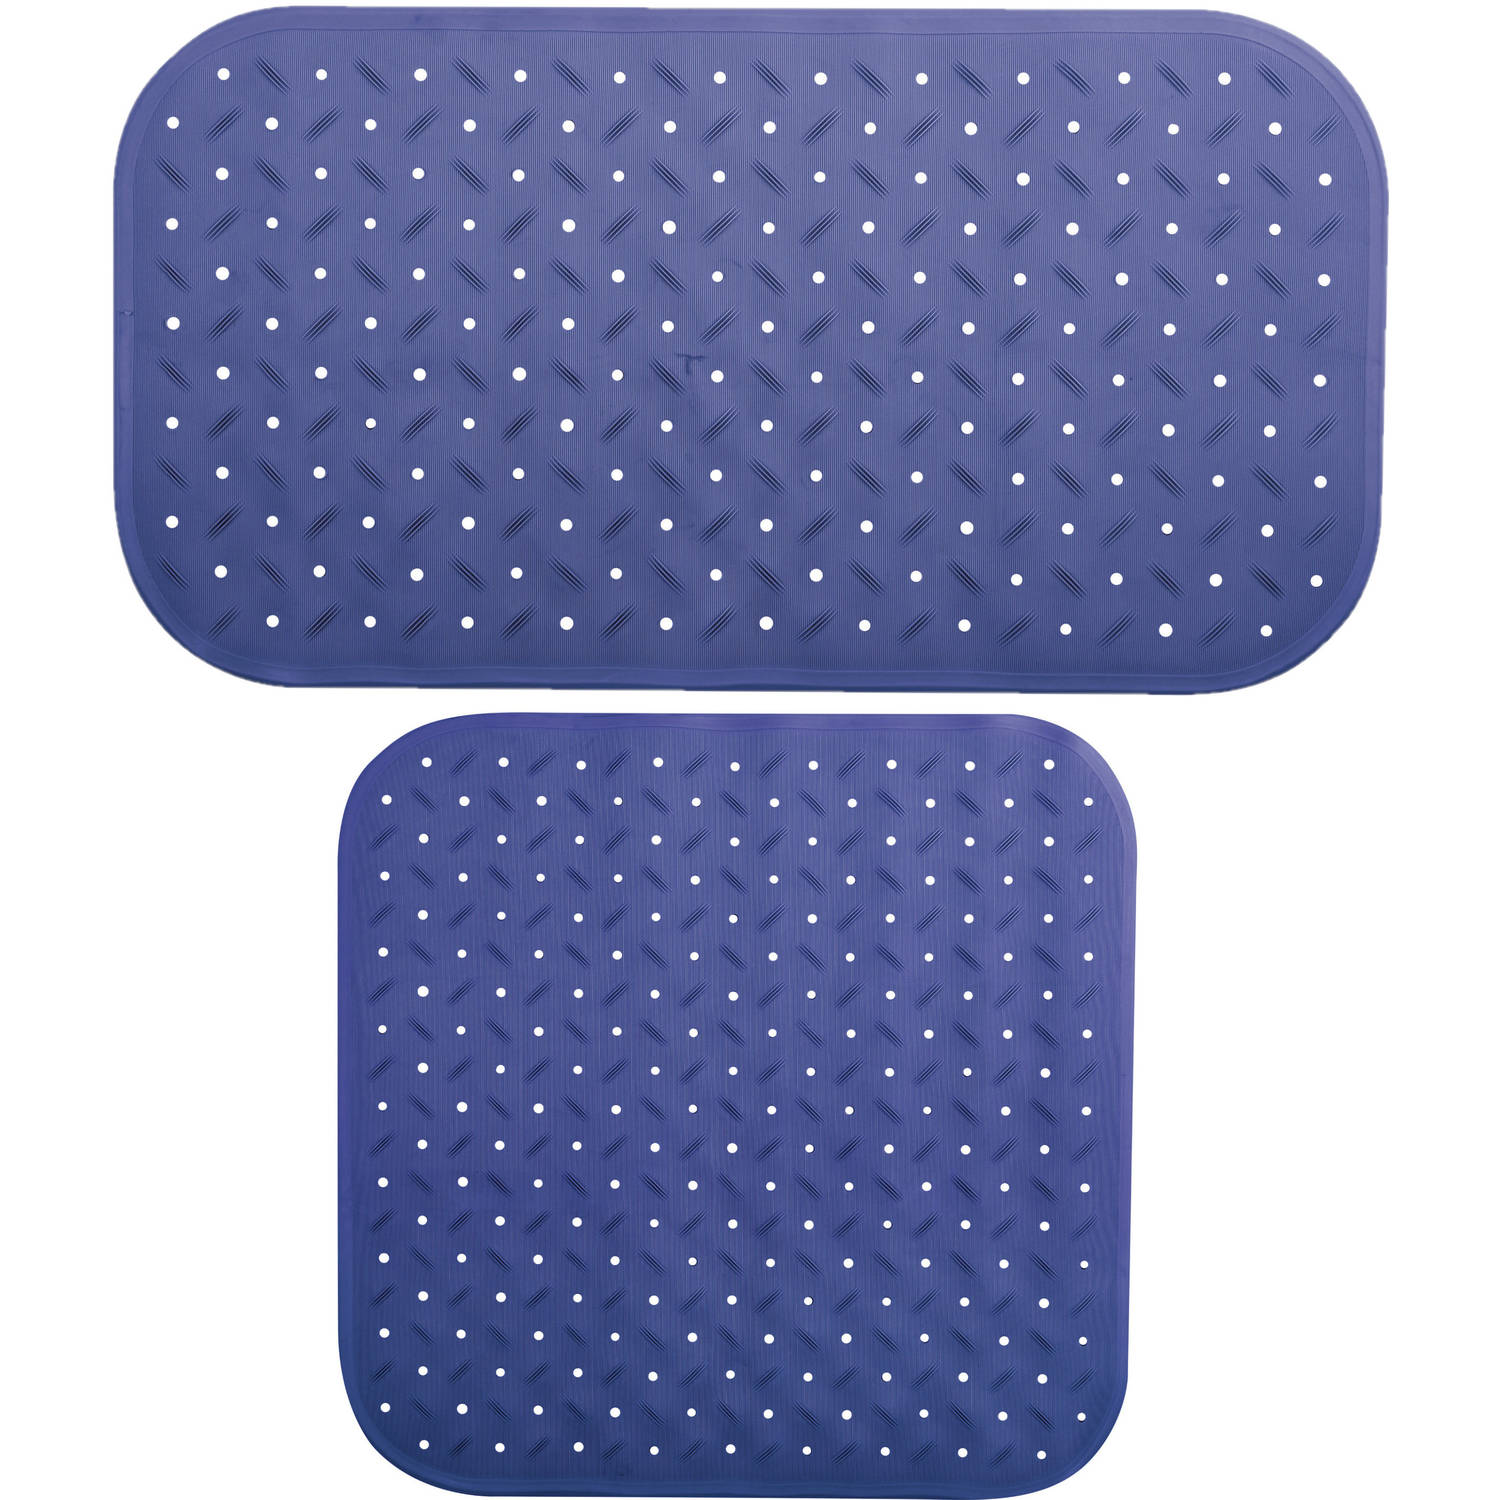 MSV Douche-bad anti-slip matten set badkamer rubber 2x stuks donkerblauw 2 formaten Badmatjes